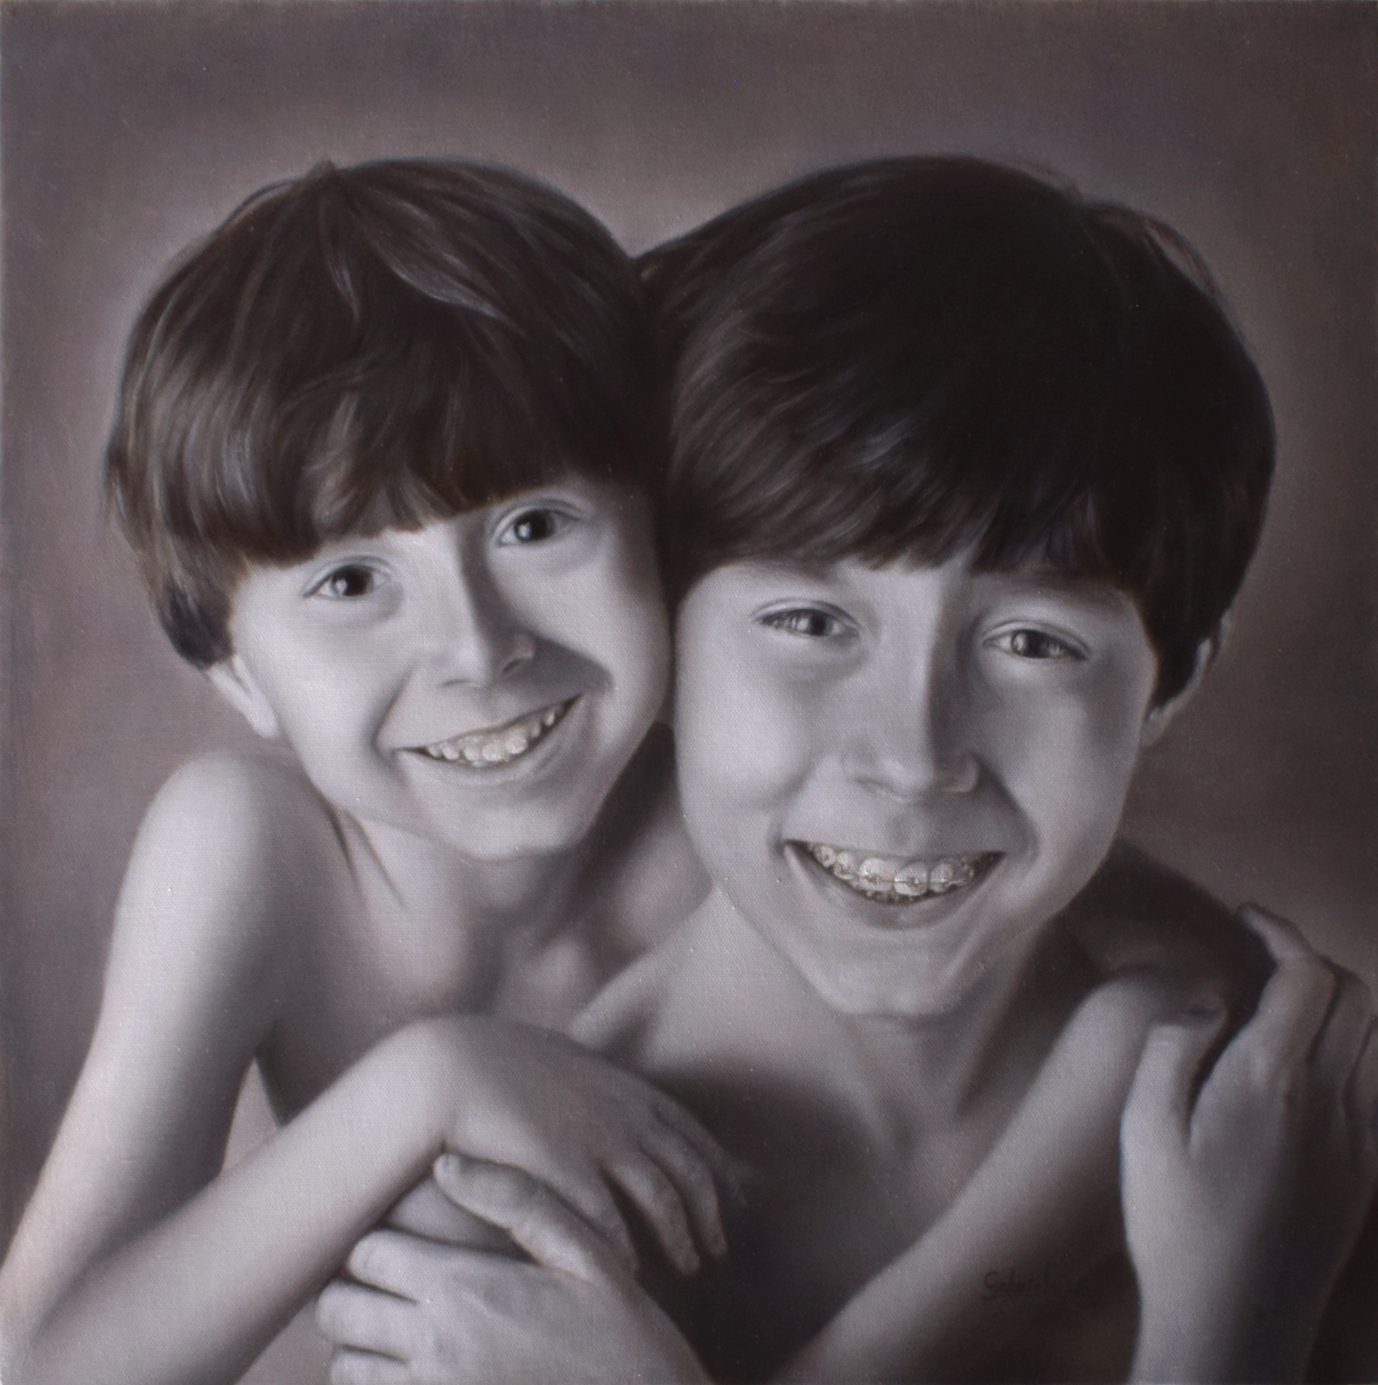 Gabriel e Rafael, oil on canvas, 50 x 50 cm, 2020